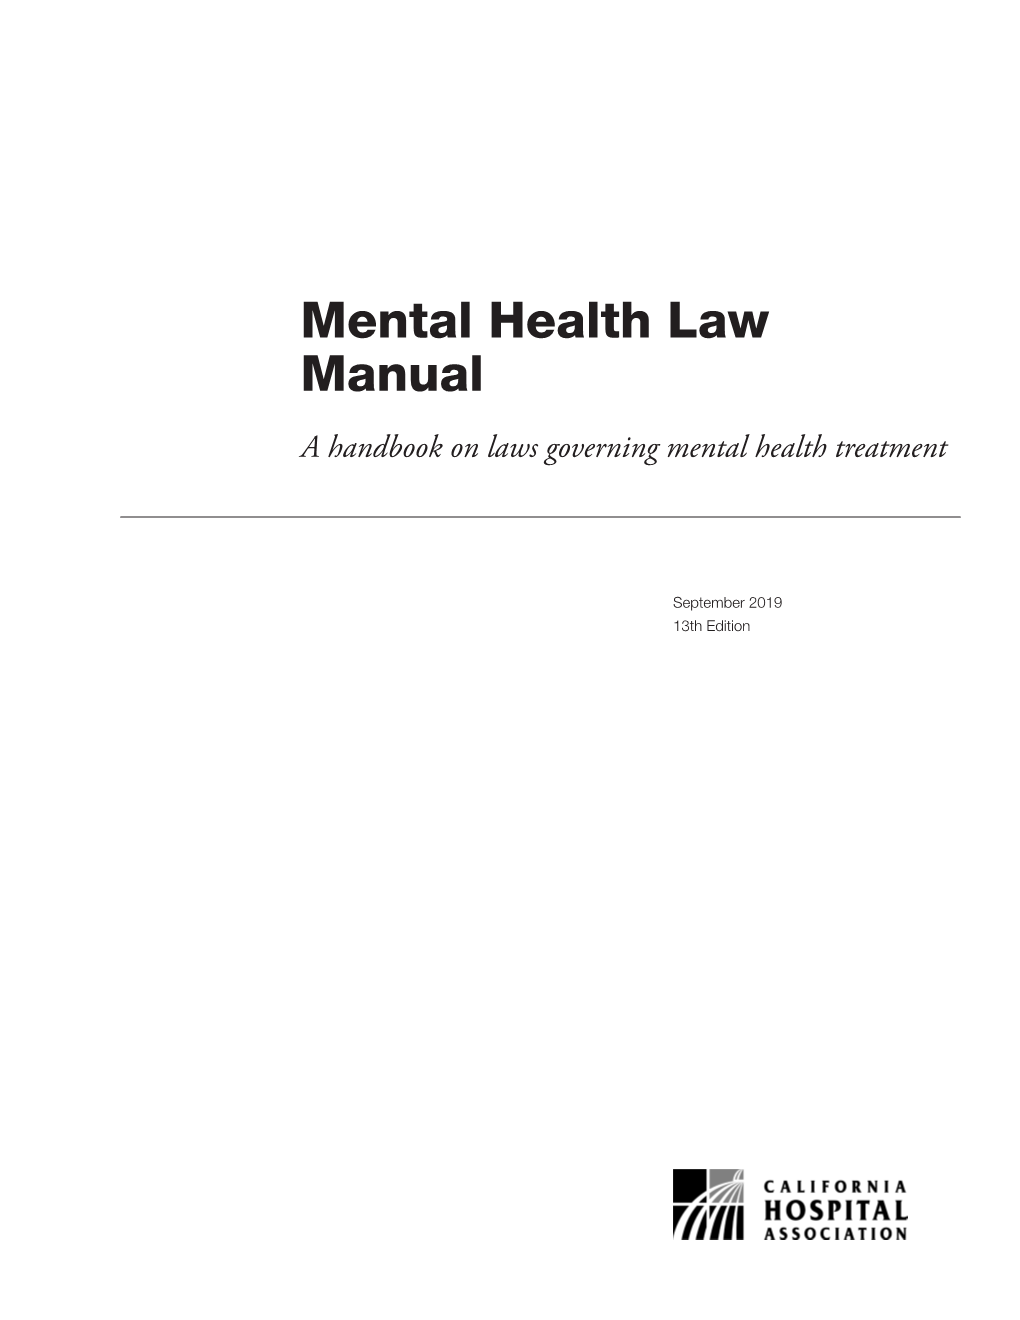 Mental Health Law Manual